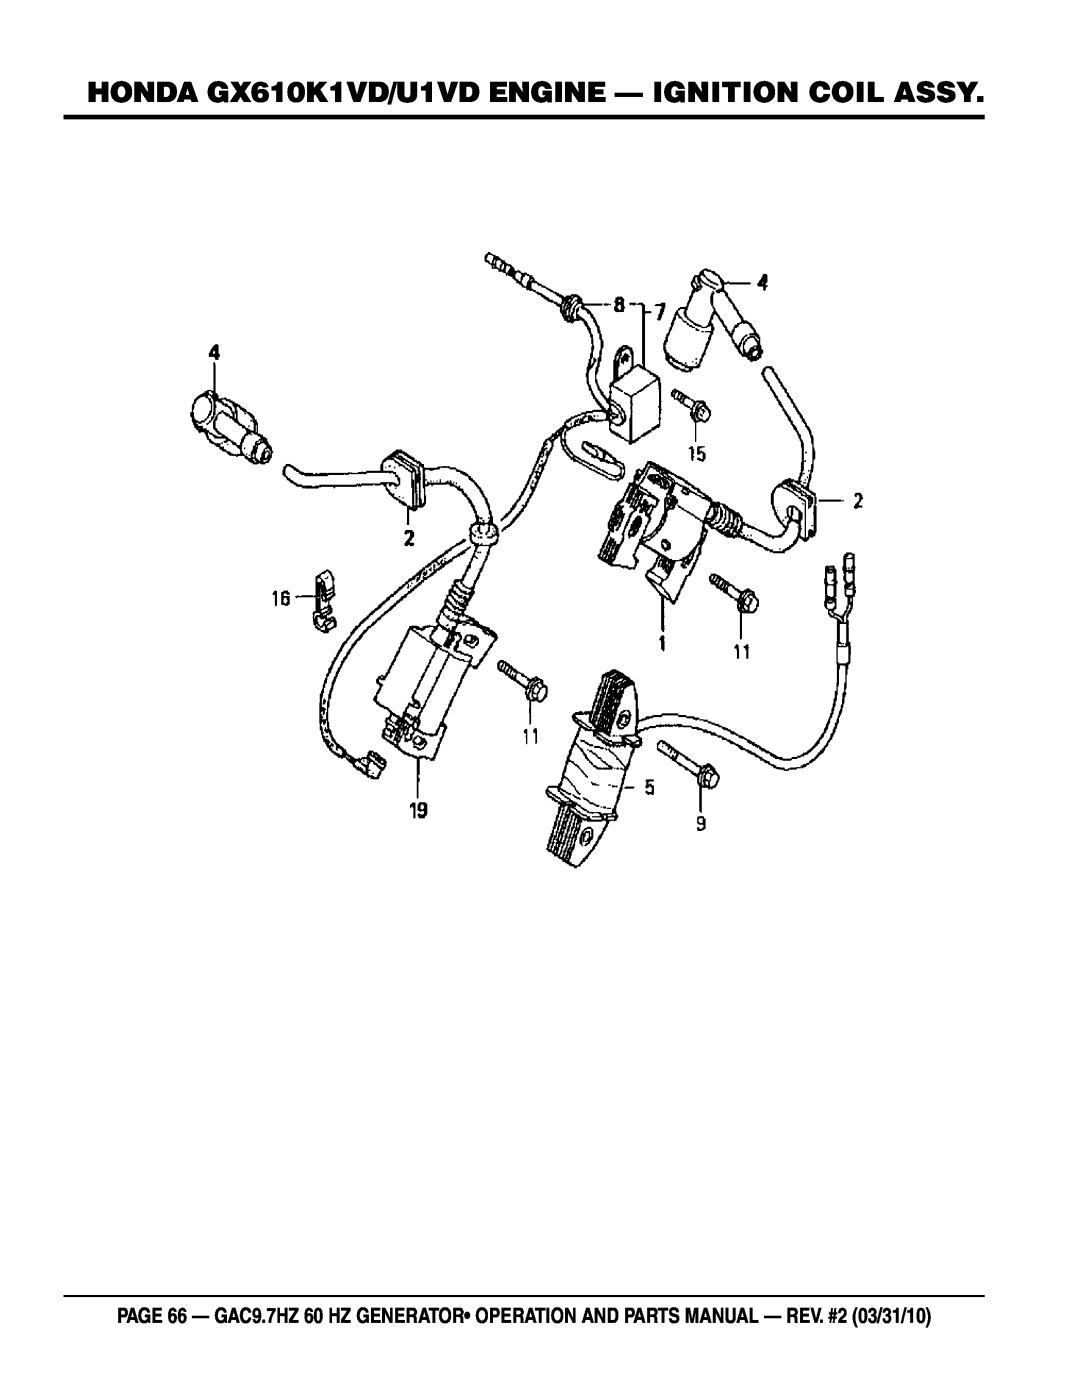 Multiquip GAC-9.7HZ manual HONDA GX610K1VD/U1VD ENGINE - IGNITION COIL ASSY 